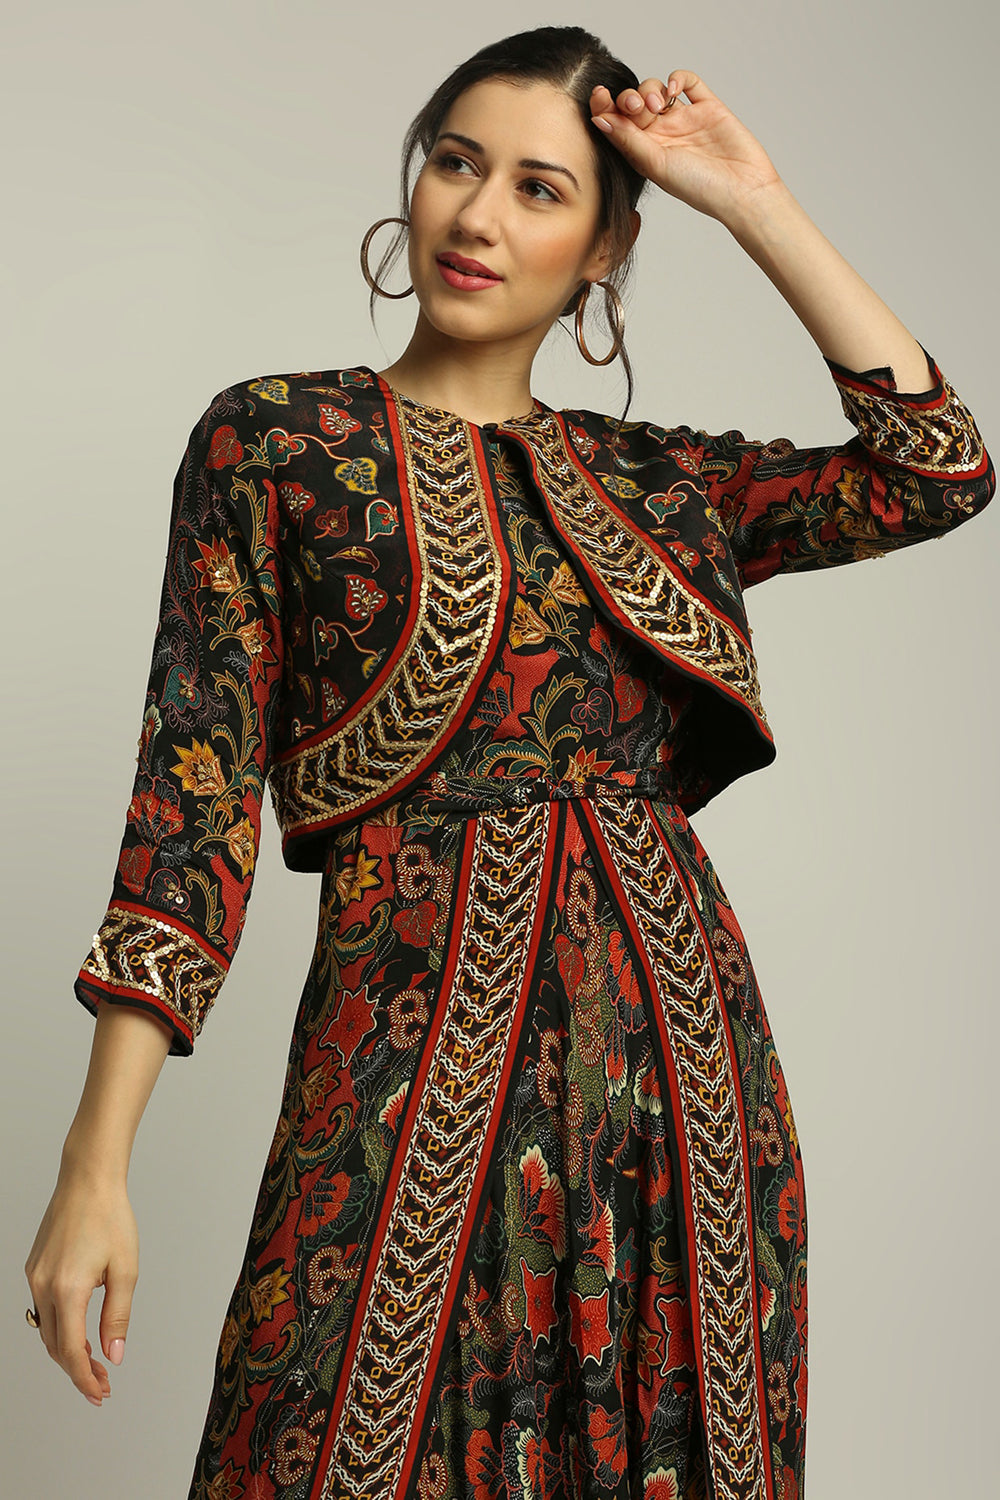 Batik Printed Dhoti Style Jumpsuit With Jacket